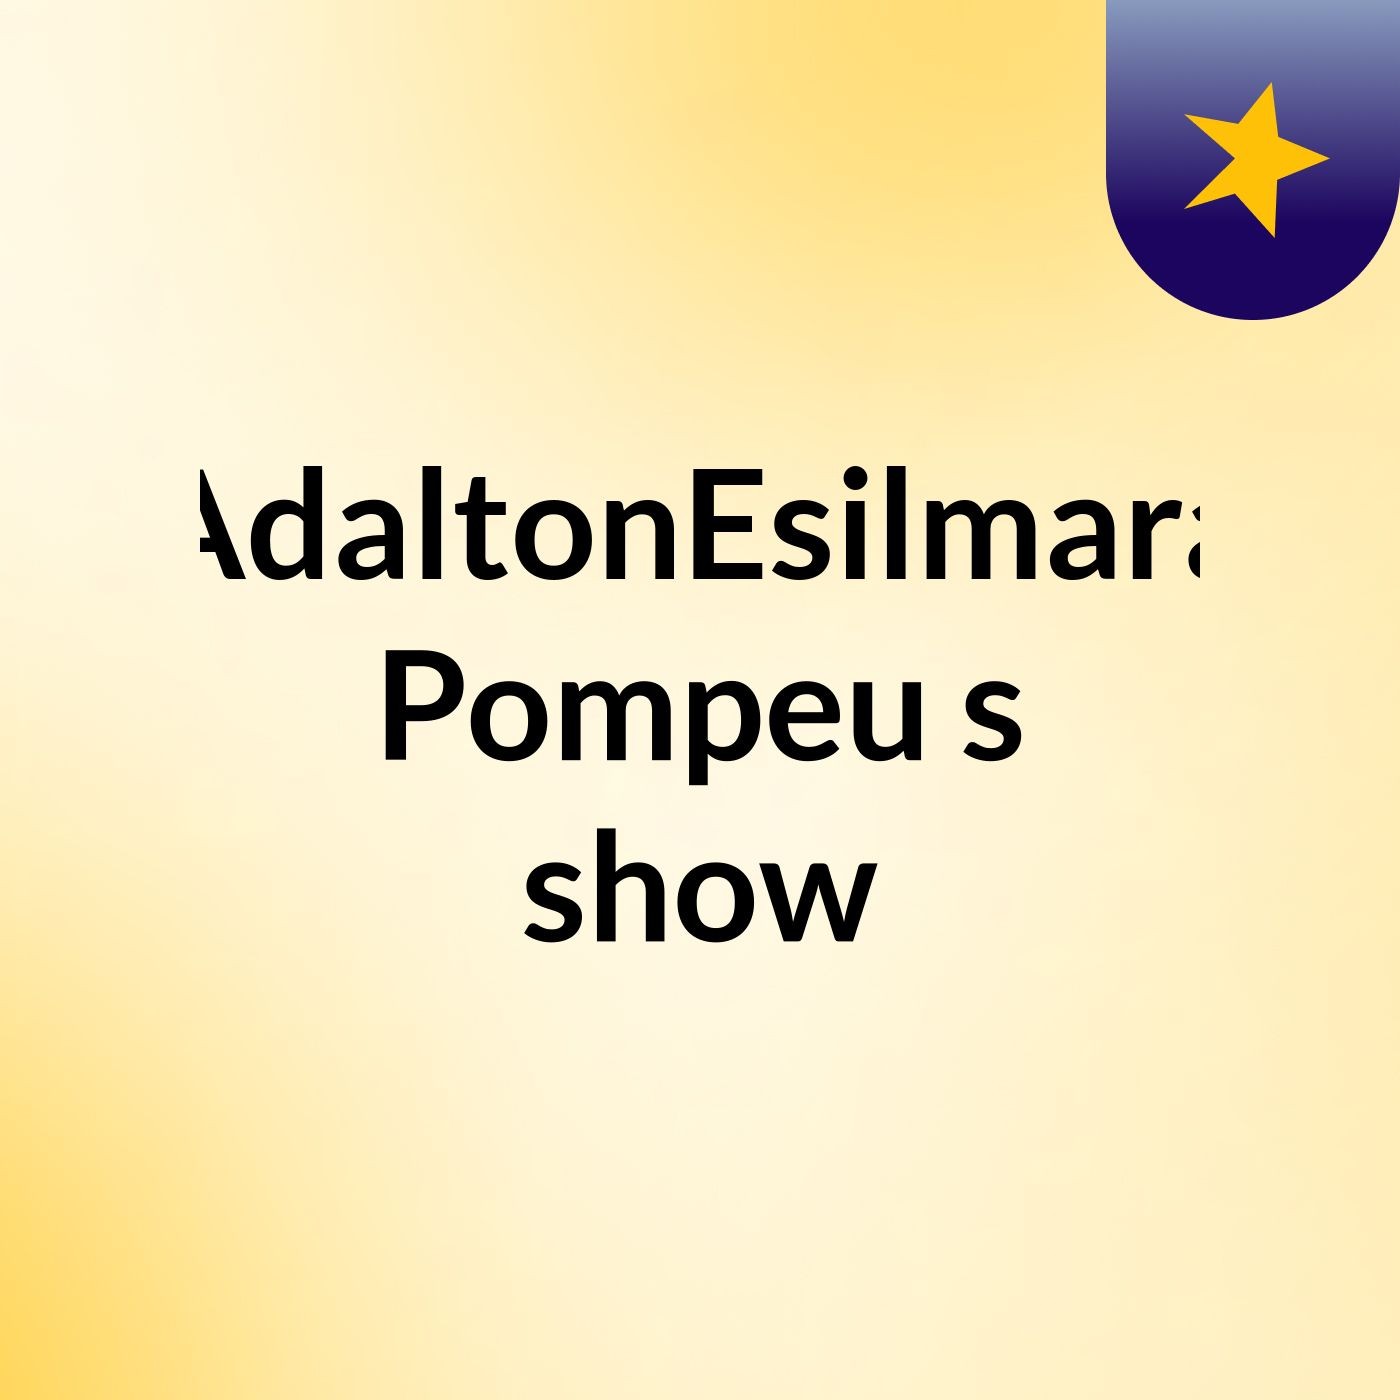 AdaltonEsilmara Pompeu's show